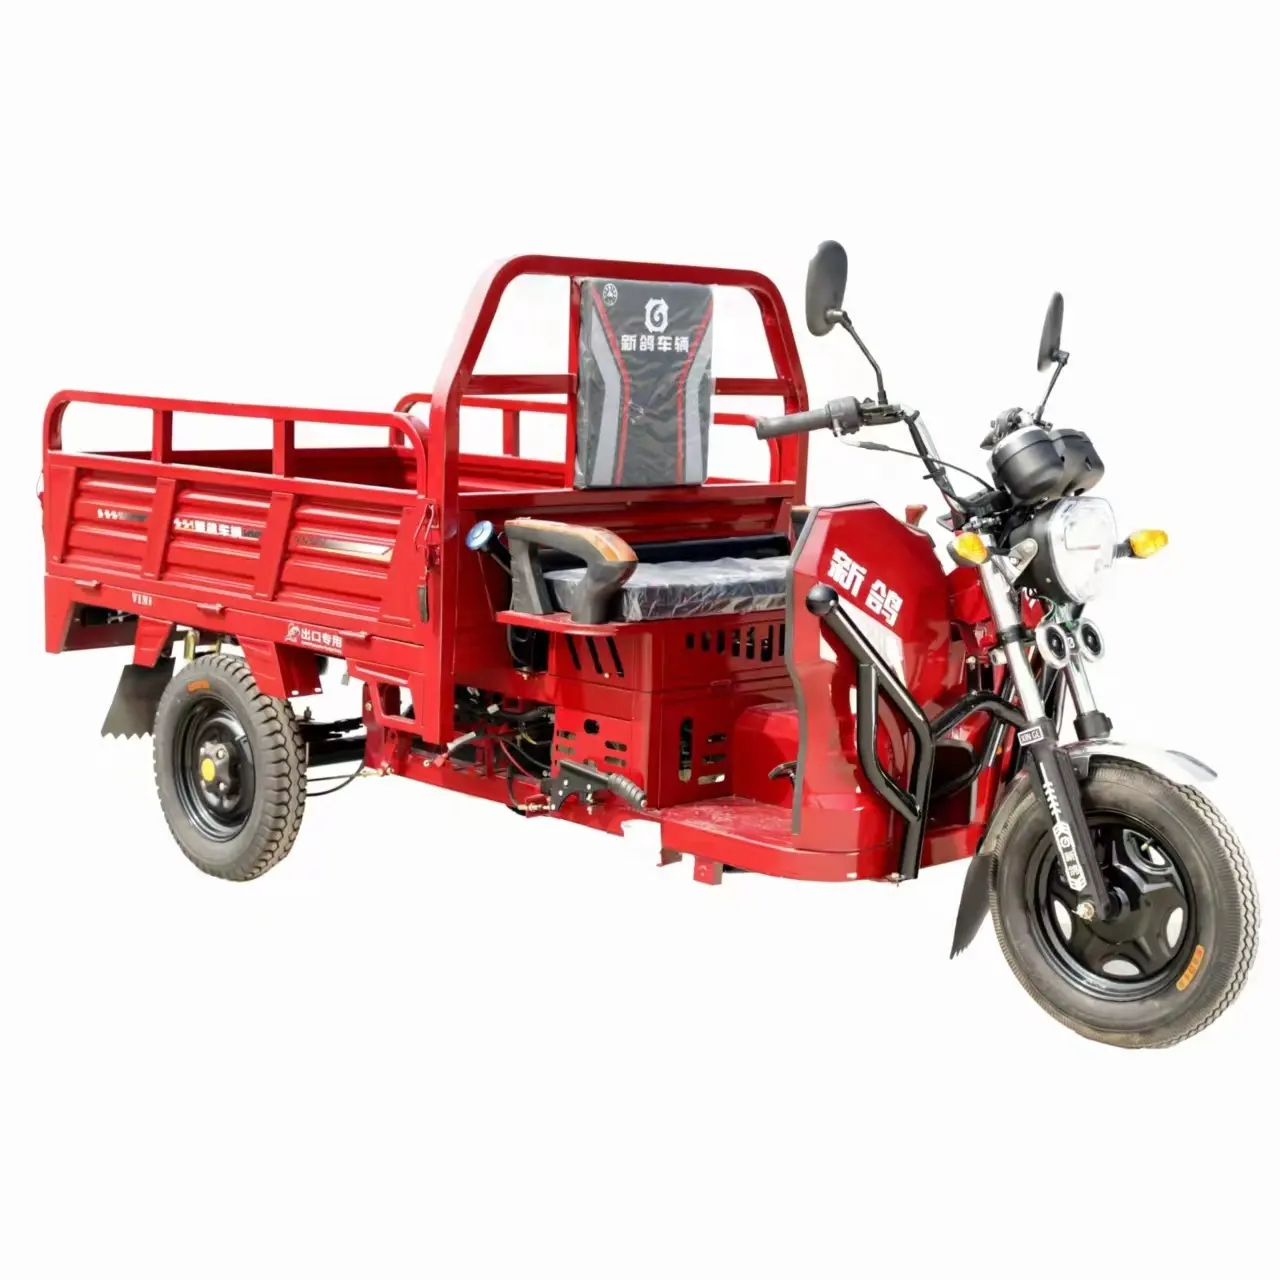 Atacado barato 110cc pequena gasolina triciclo família usado mobilidade scooter idosos motocicleta 3 rodas